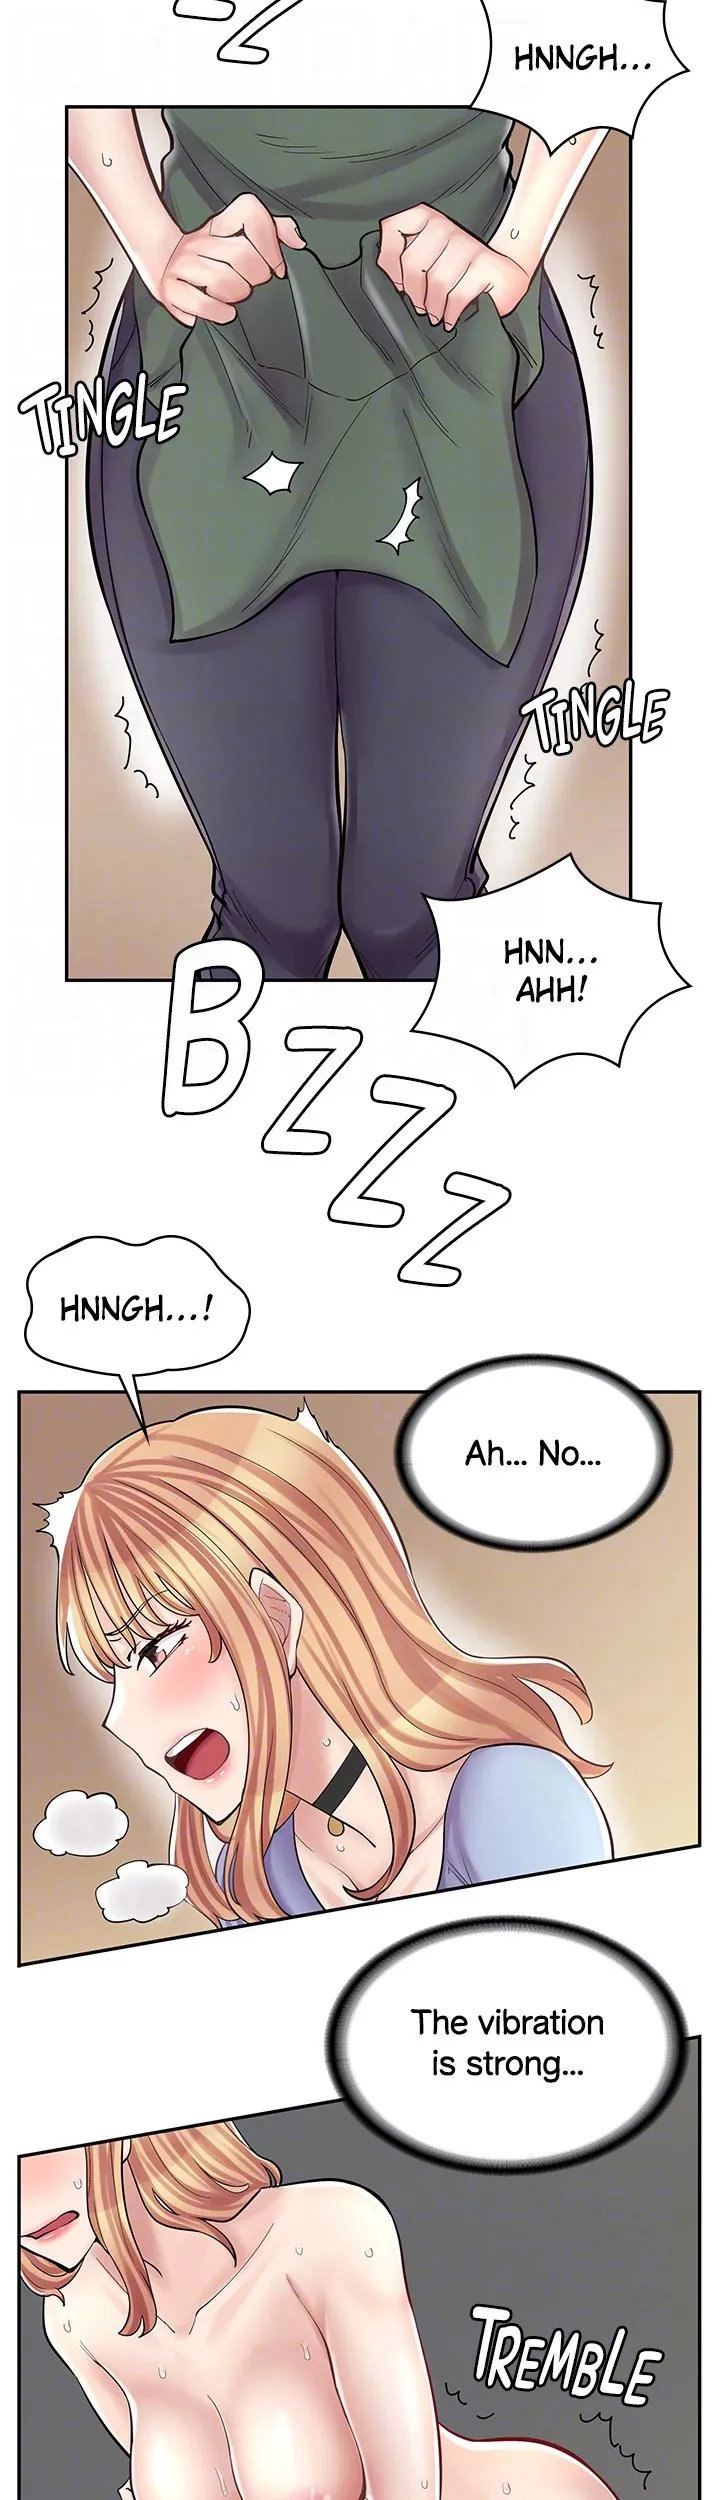 Erotic Manga Café Girls Chapter 7 - Page 36